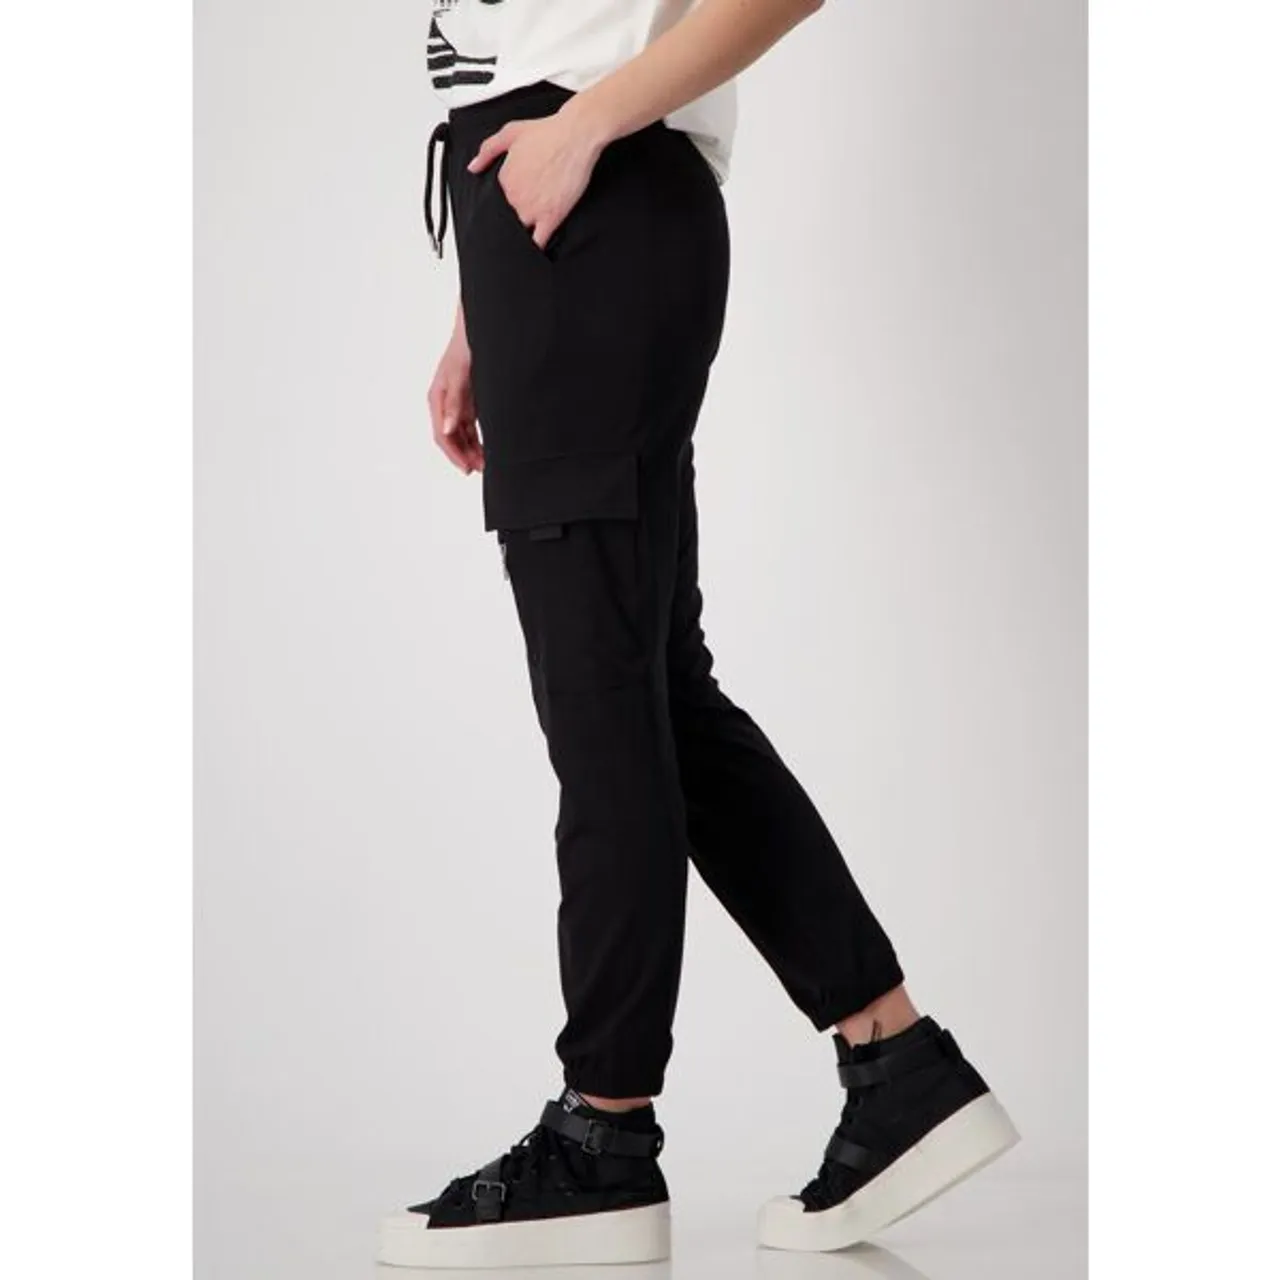 Jogger Pants MONARI Gr. 44, N-Gr, schwarz Damen Hosen Joggpants Track Pants mit aufgesetzten Taschen